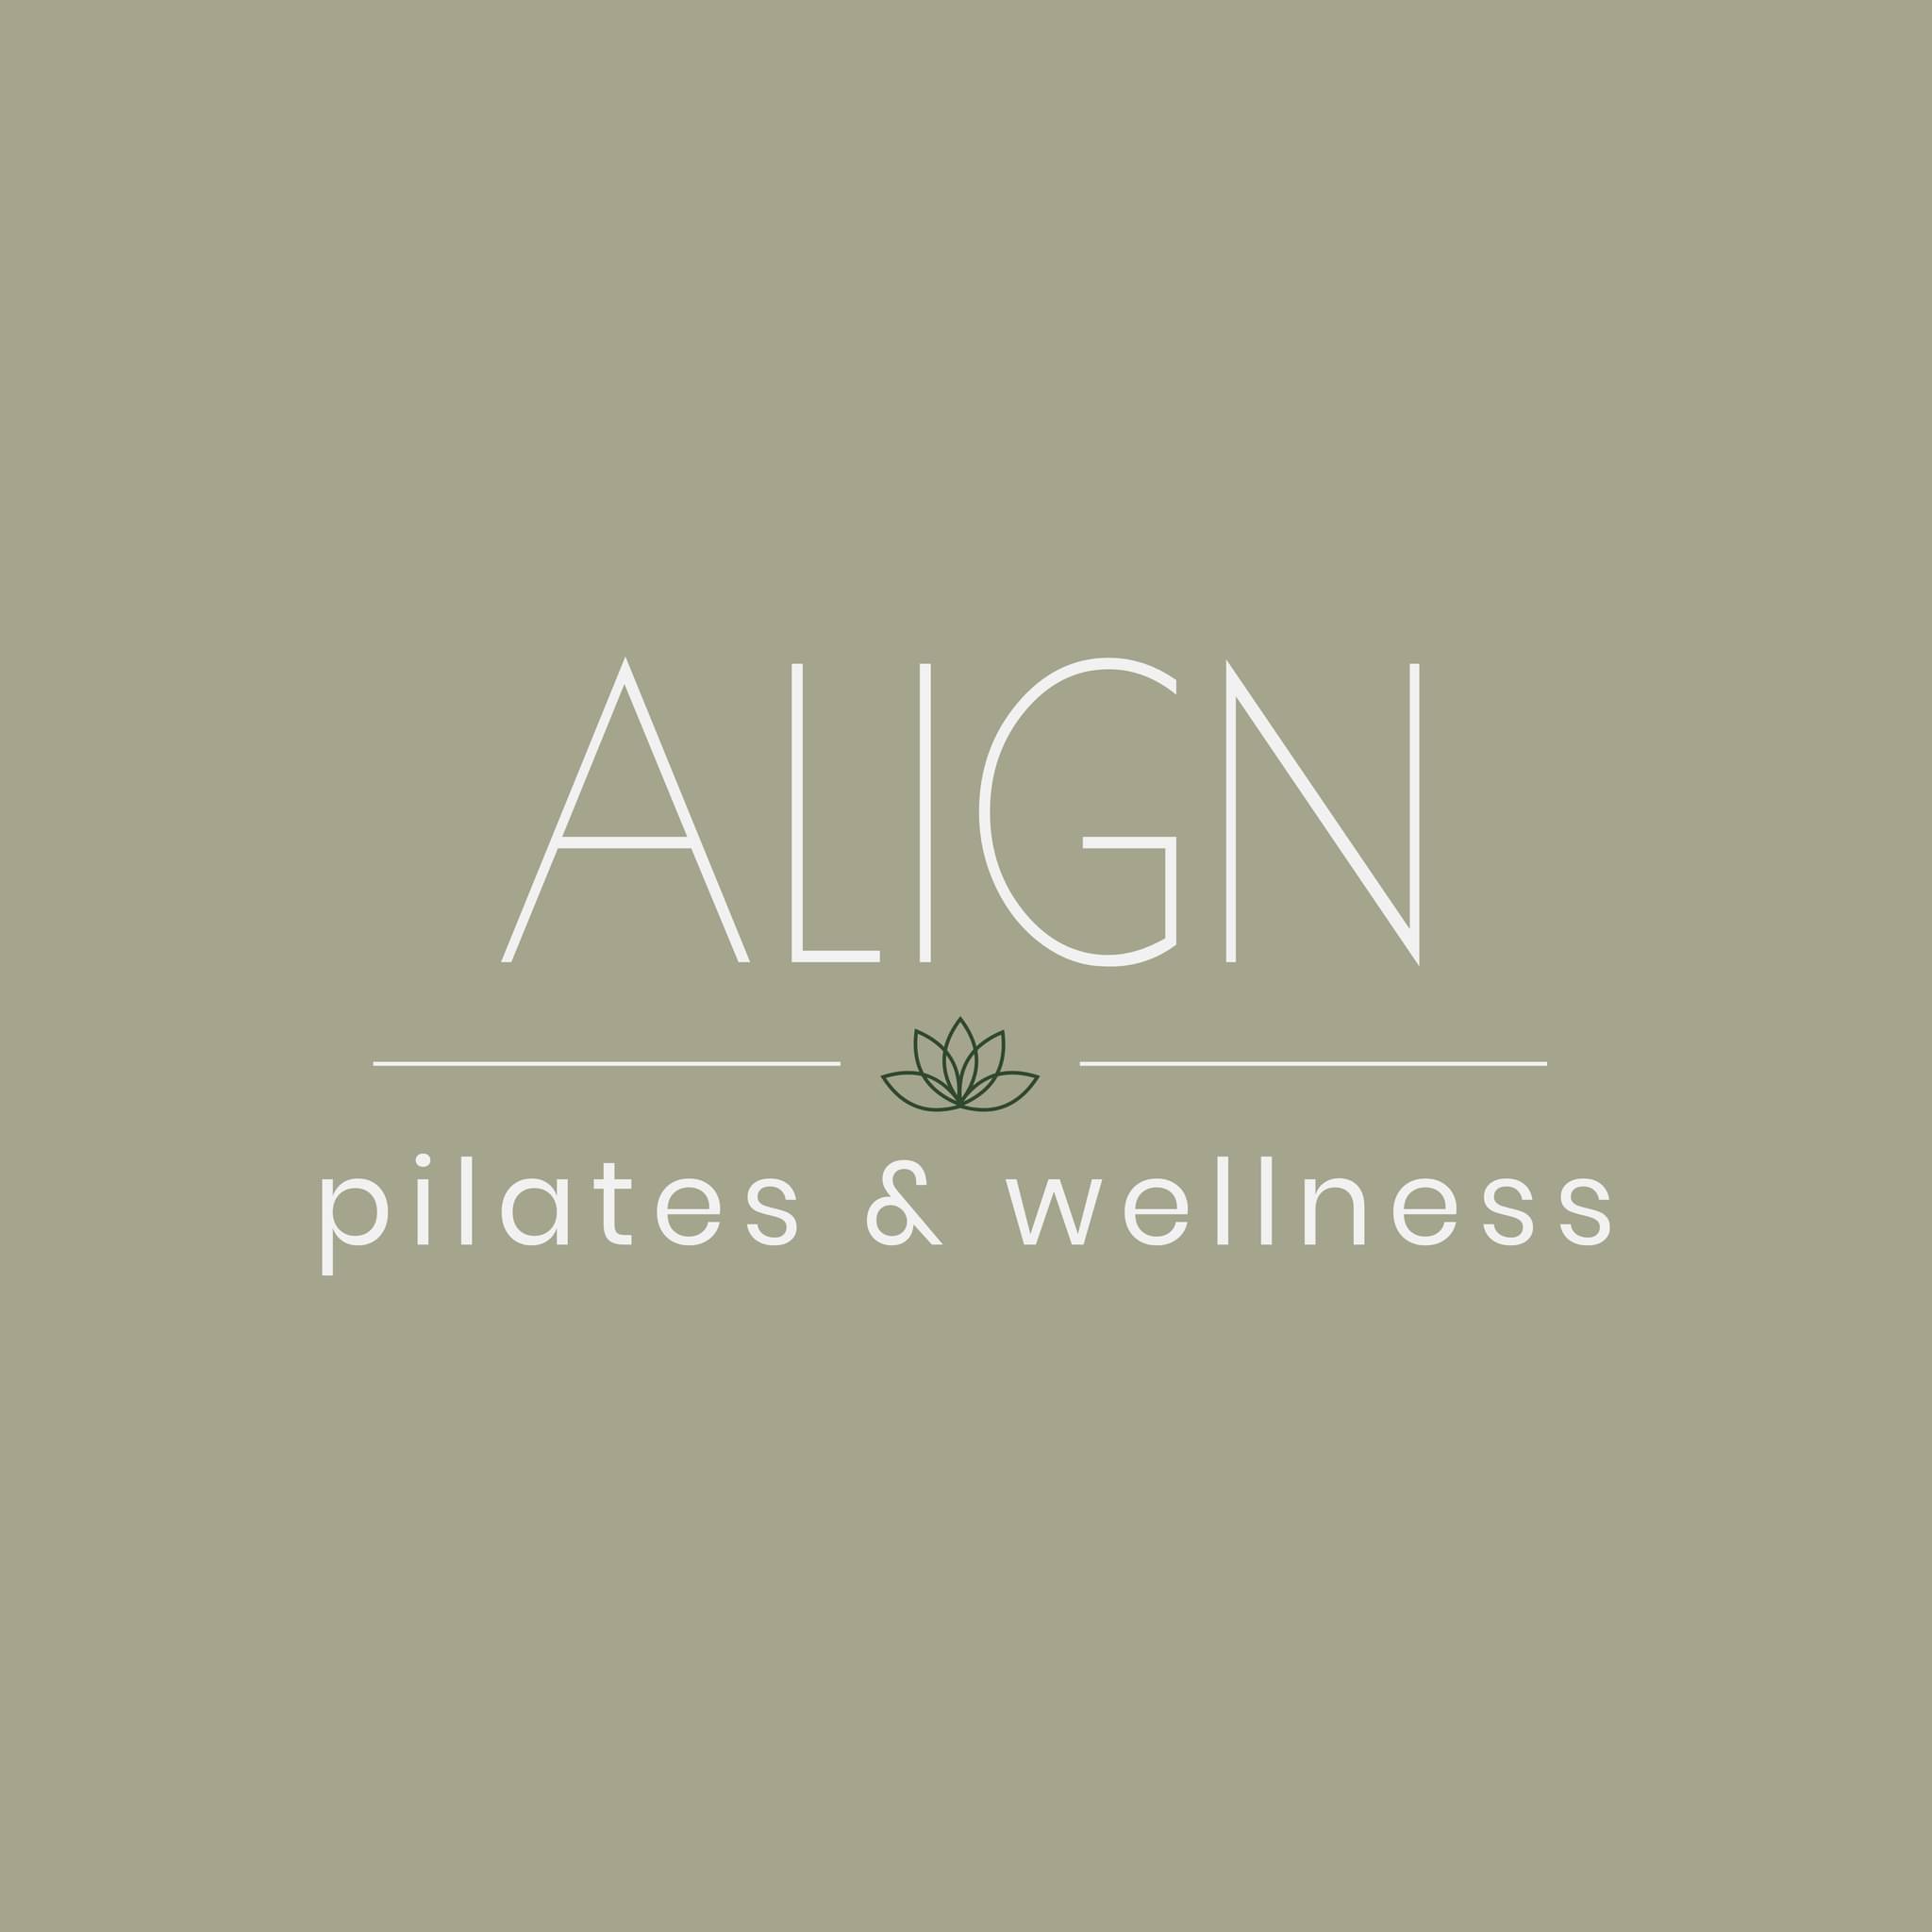 Align Pilates & Wellness